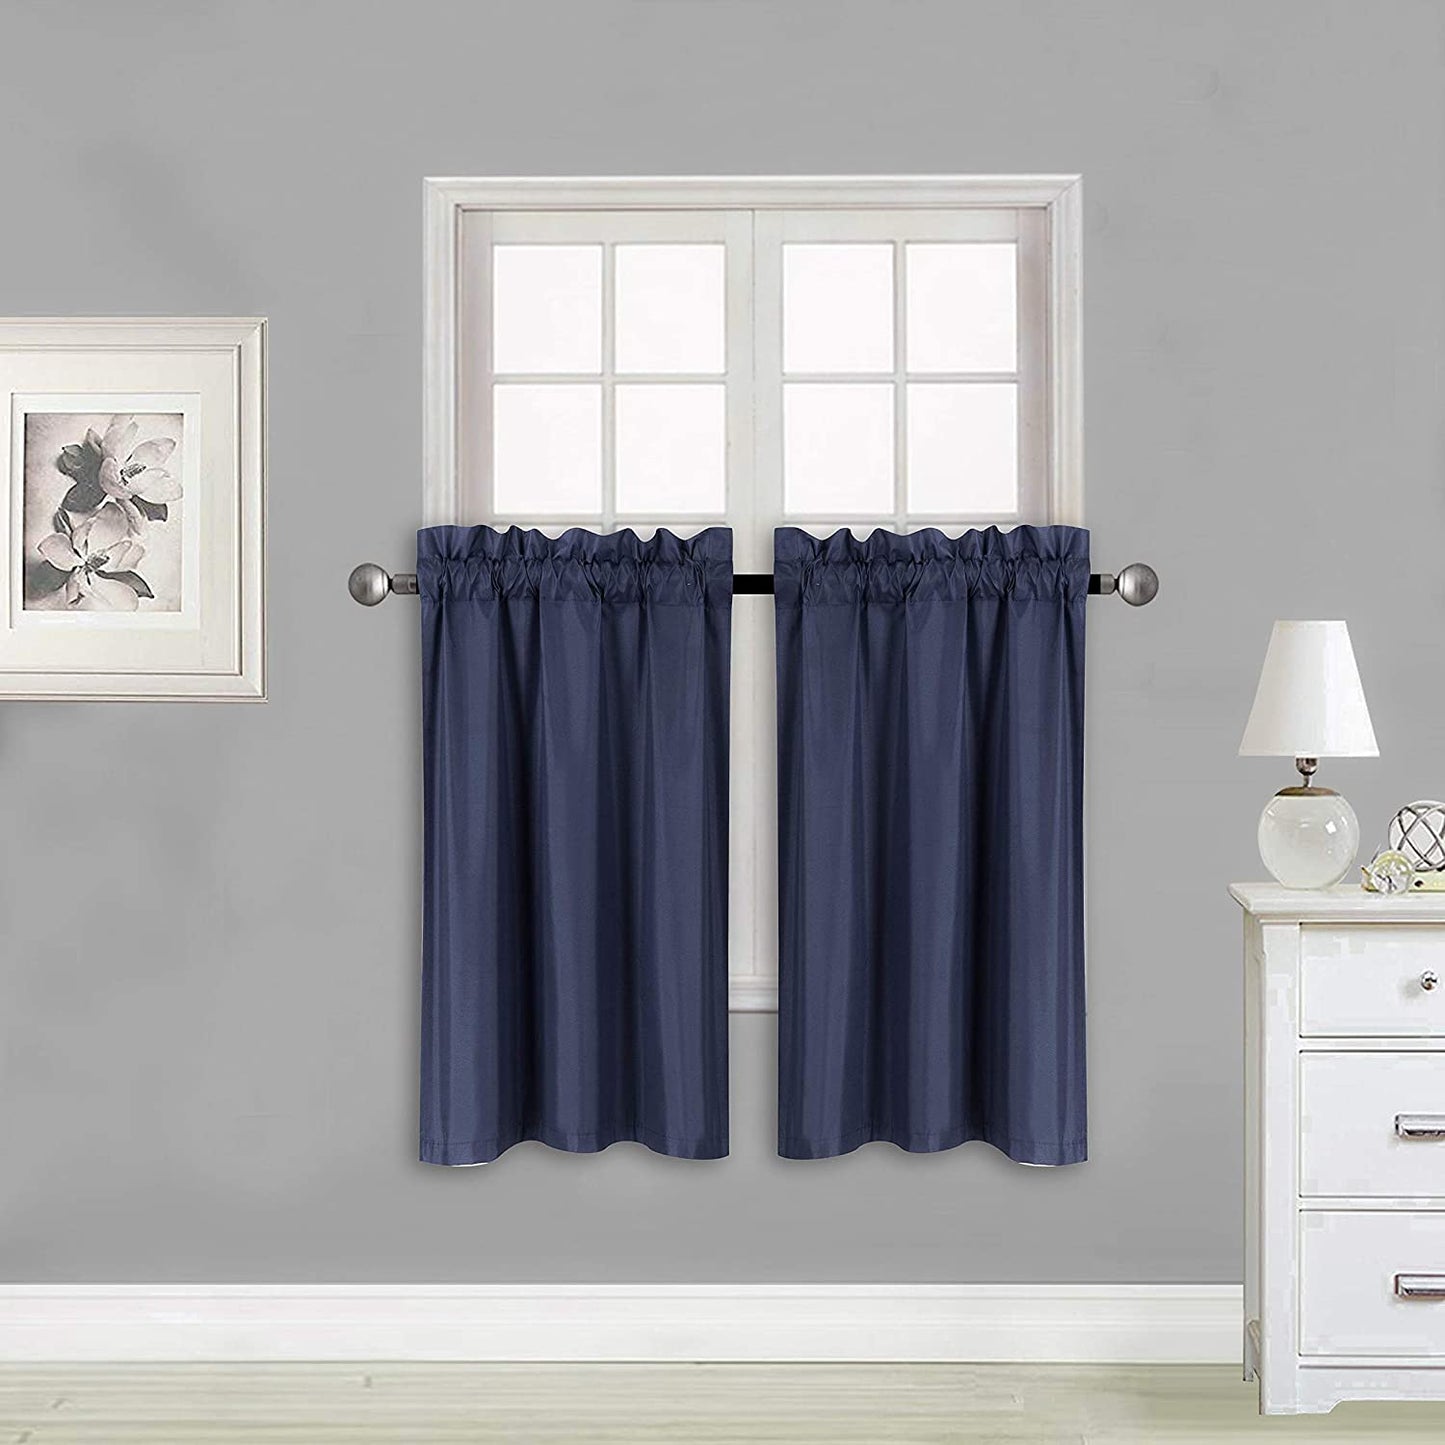 Elegant Home 2 Short Panels Tiers Small Window Treatment Curtain Blackout 28" W X 36" L Each for Kitchen Bathroom # R5  Elegant Home Decor Navy Blue  